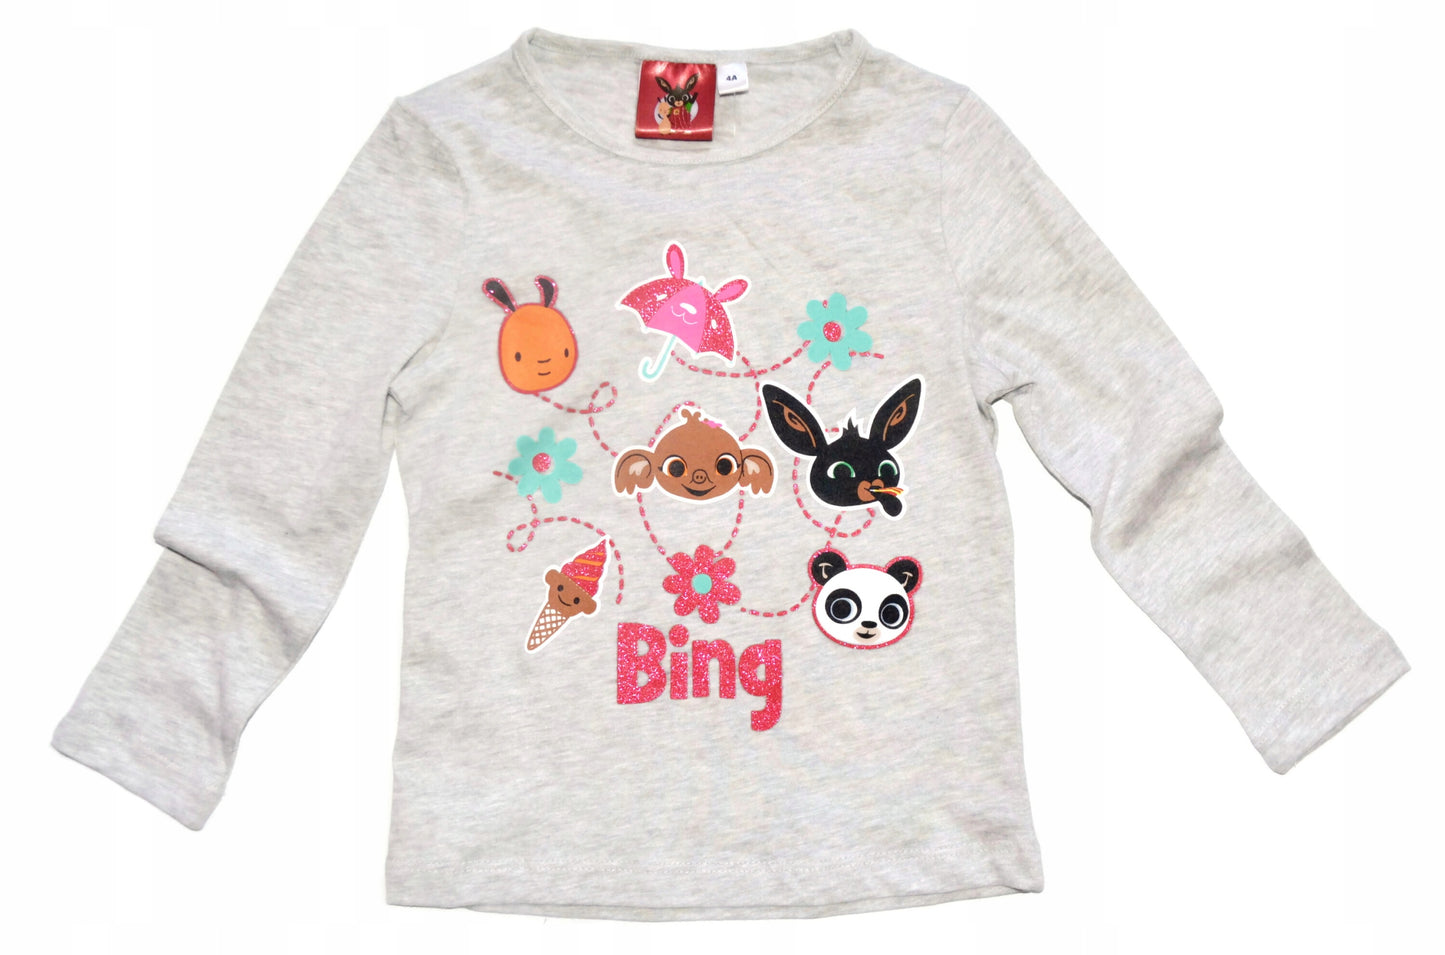 Bing Bunny Long Sleeve T-Shirt